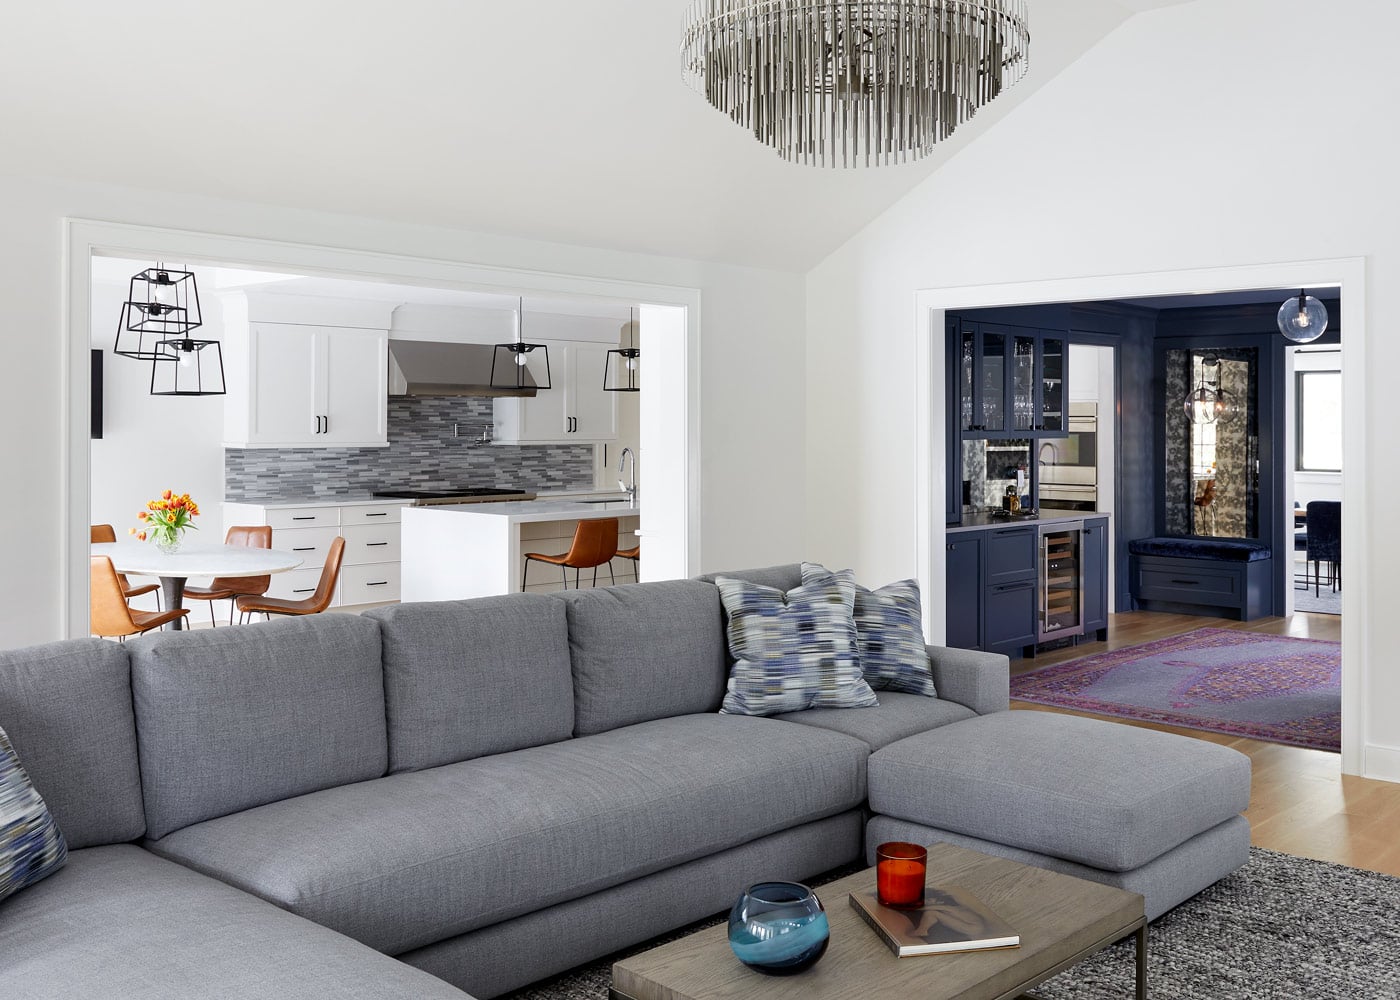 Sands Point modern living room designed by Annette Jaffe Interiors